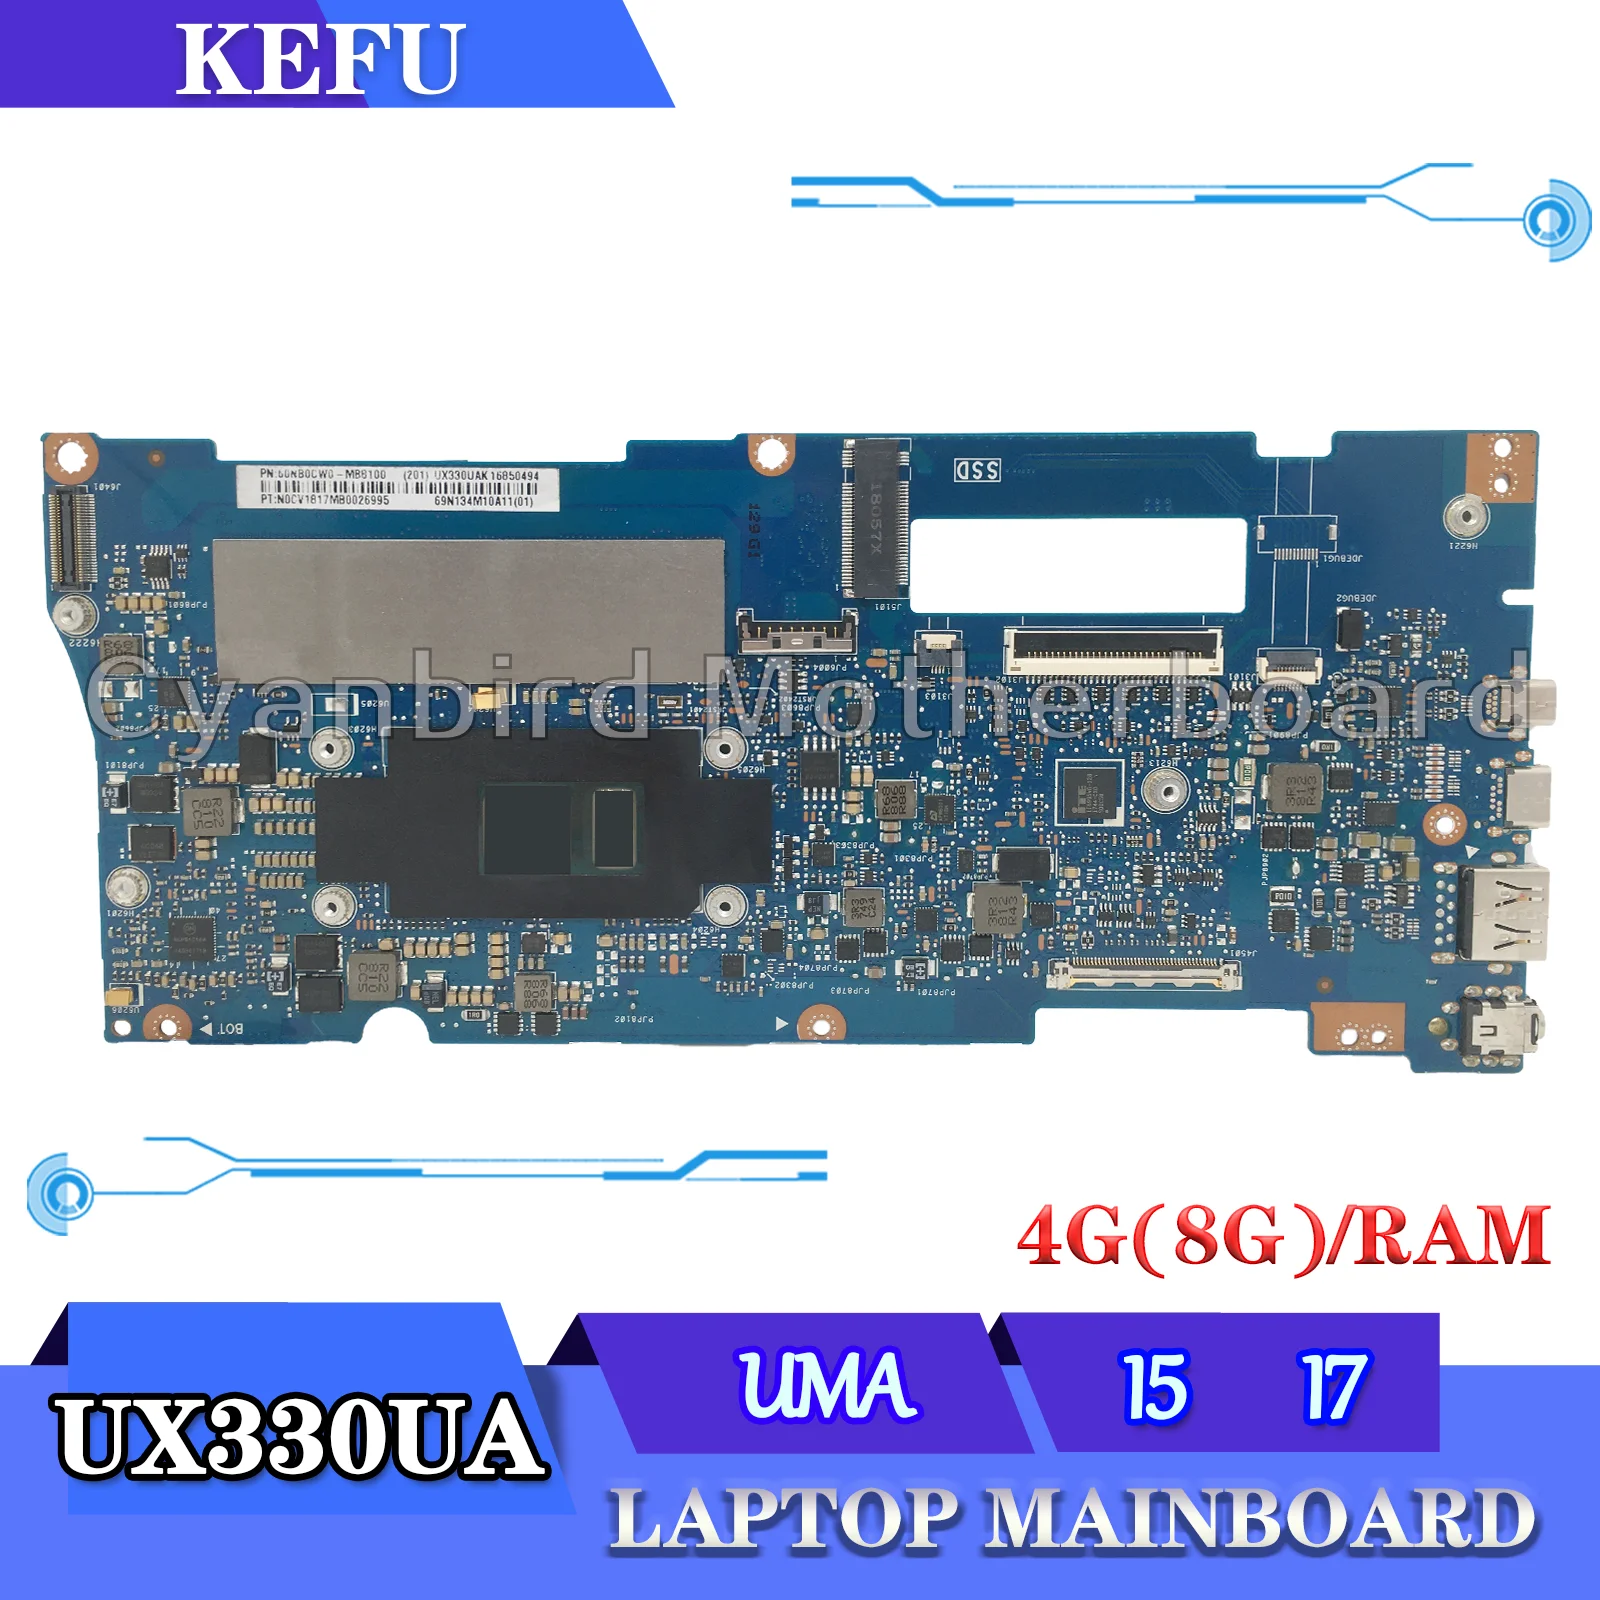 

KEFU Mainboard UX330UA For ASUS ZenBook UX330 UX330U UX330UAK U330UA U3000U Laptop Motherboard i5 i7 RAM-4GB/8GB Maintherboard